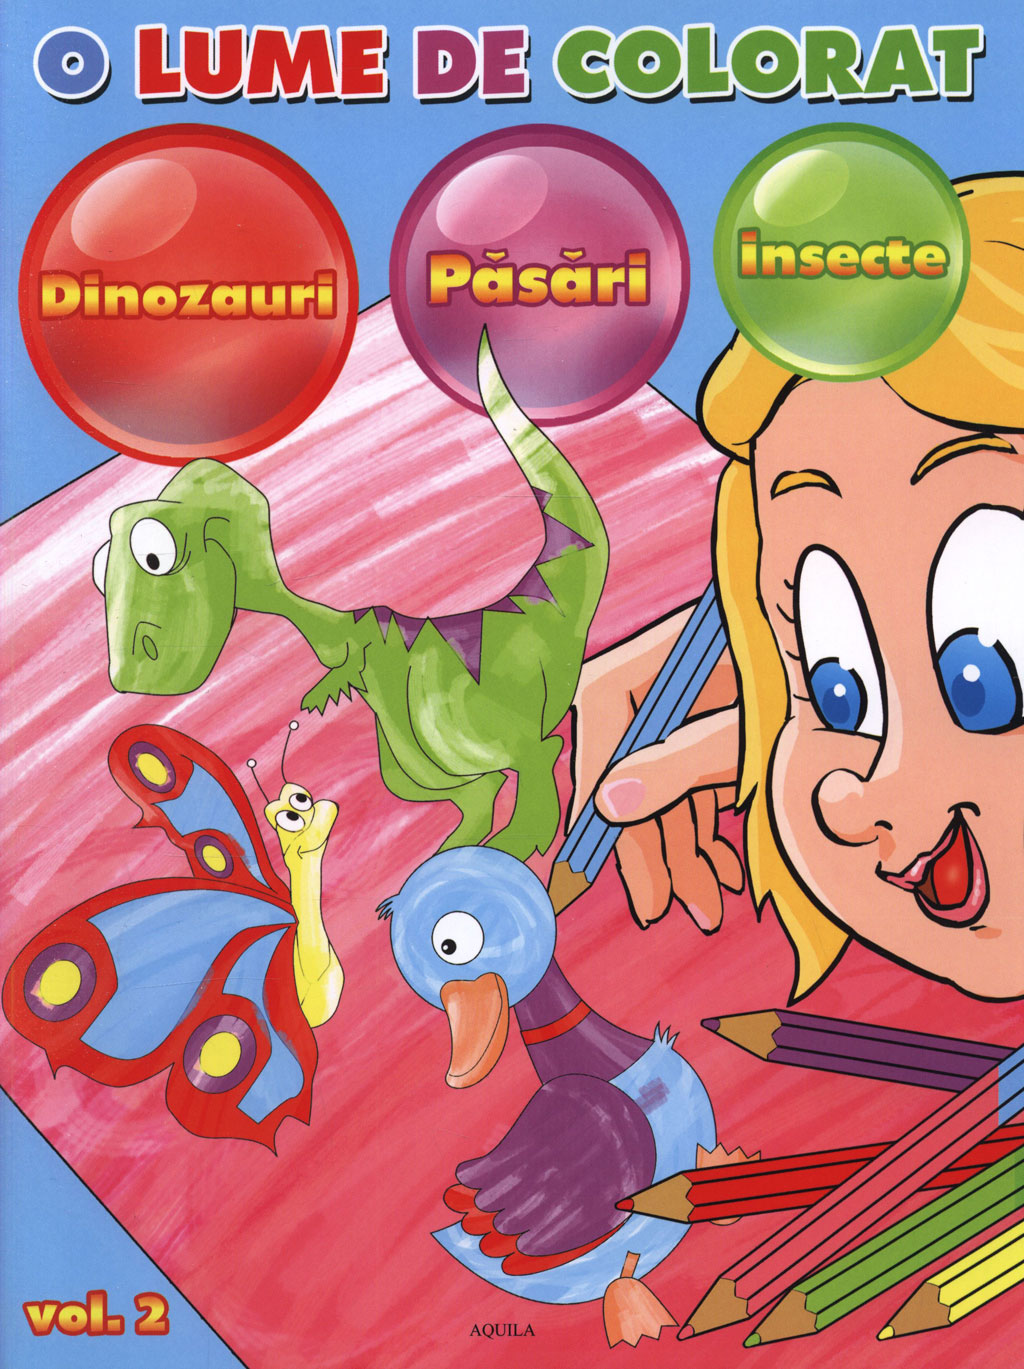 O lume de colorat. Vol. 2 - Dinozauri. Pasari. Insecte